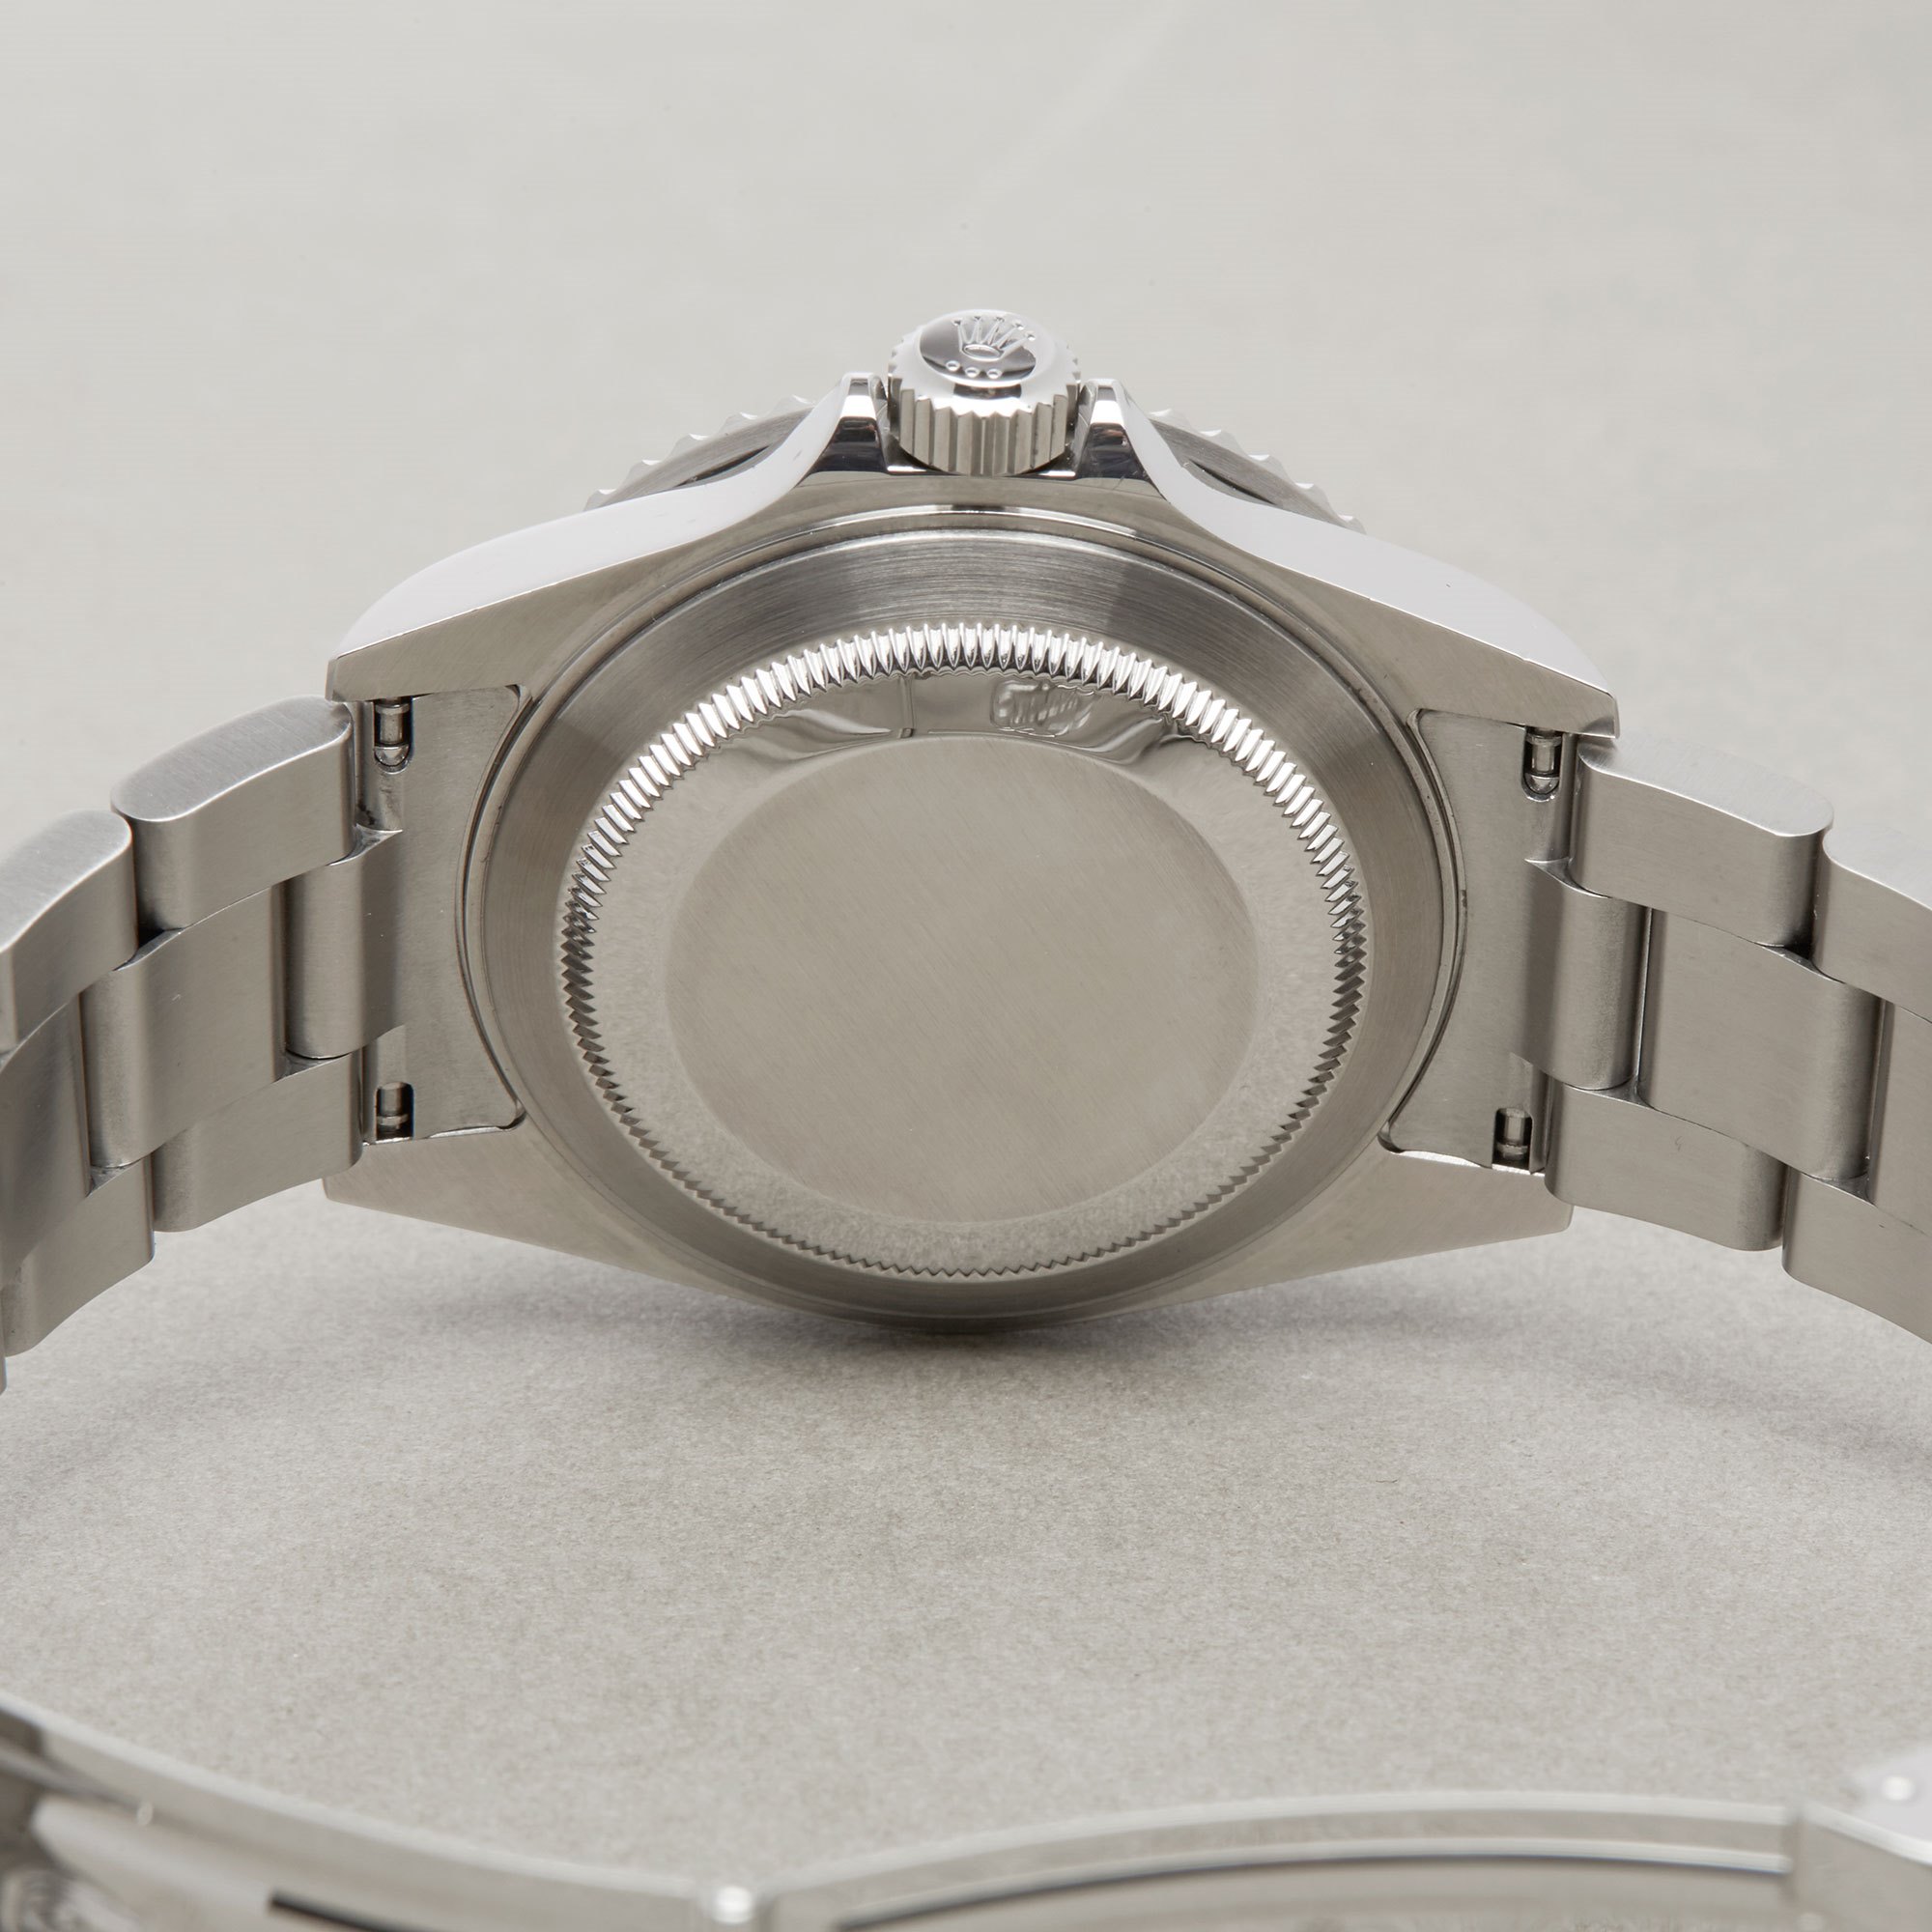 Rolex Submariner Date 16610 Men Stainless Steel Watch - Image 7 of 10